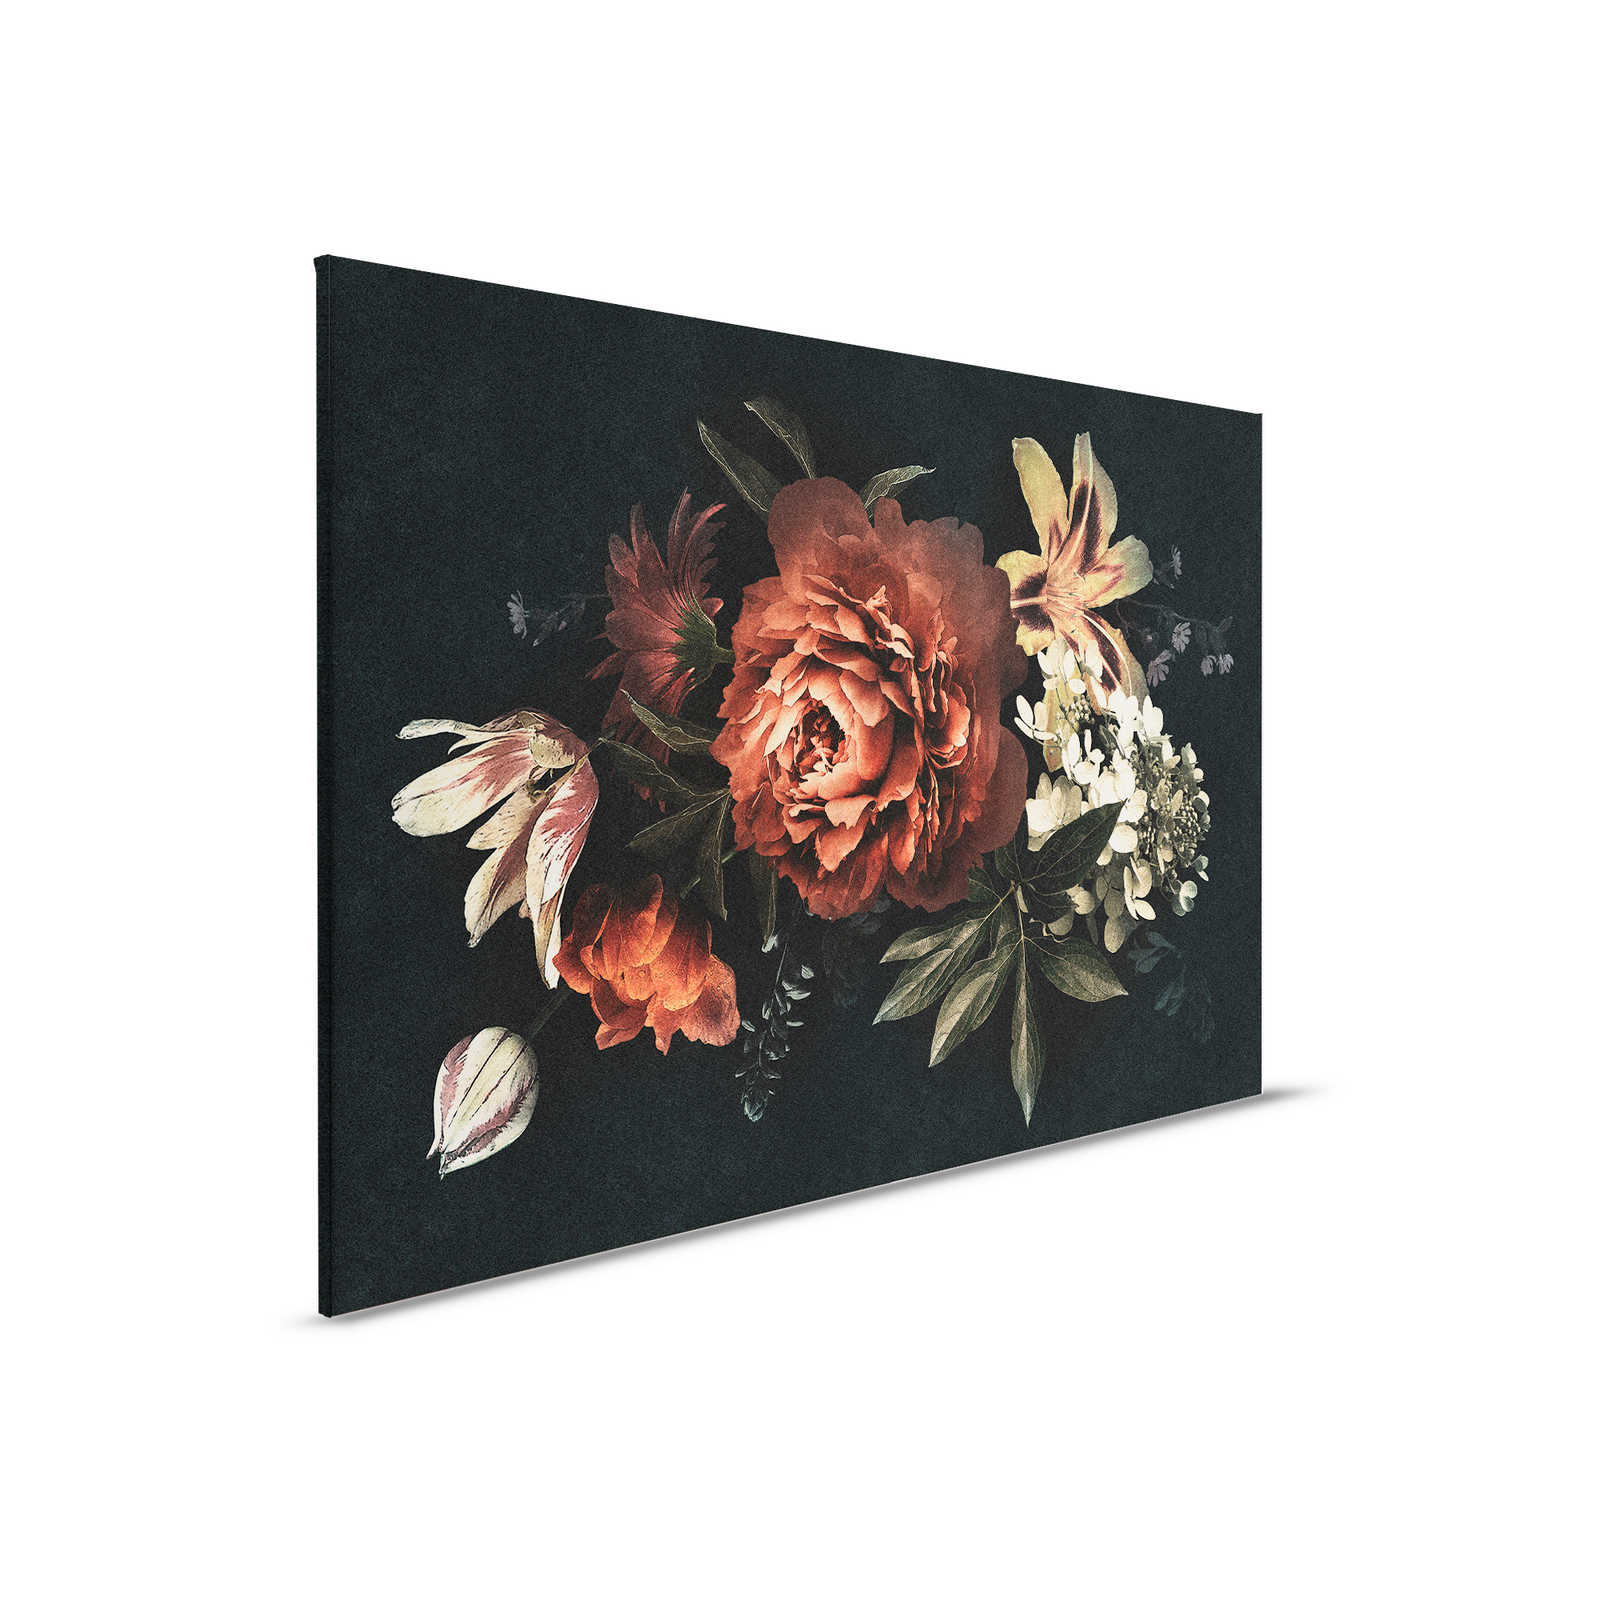 Drama queen 1 - Bouquet canvas picture with dark background in cardboard structure - 0.90 m x 0.60 m
